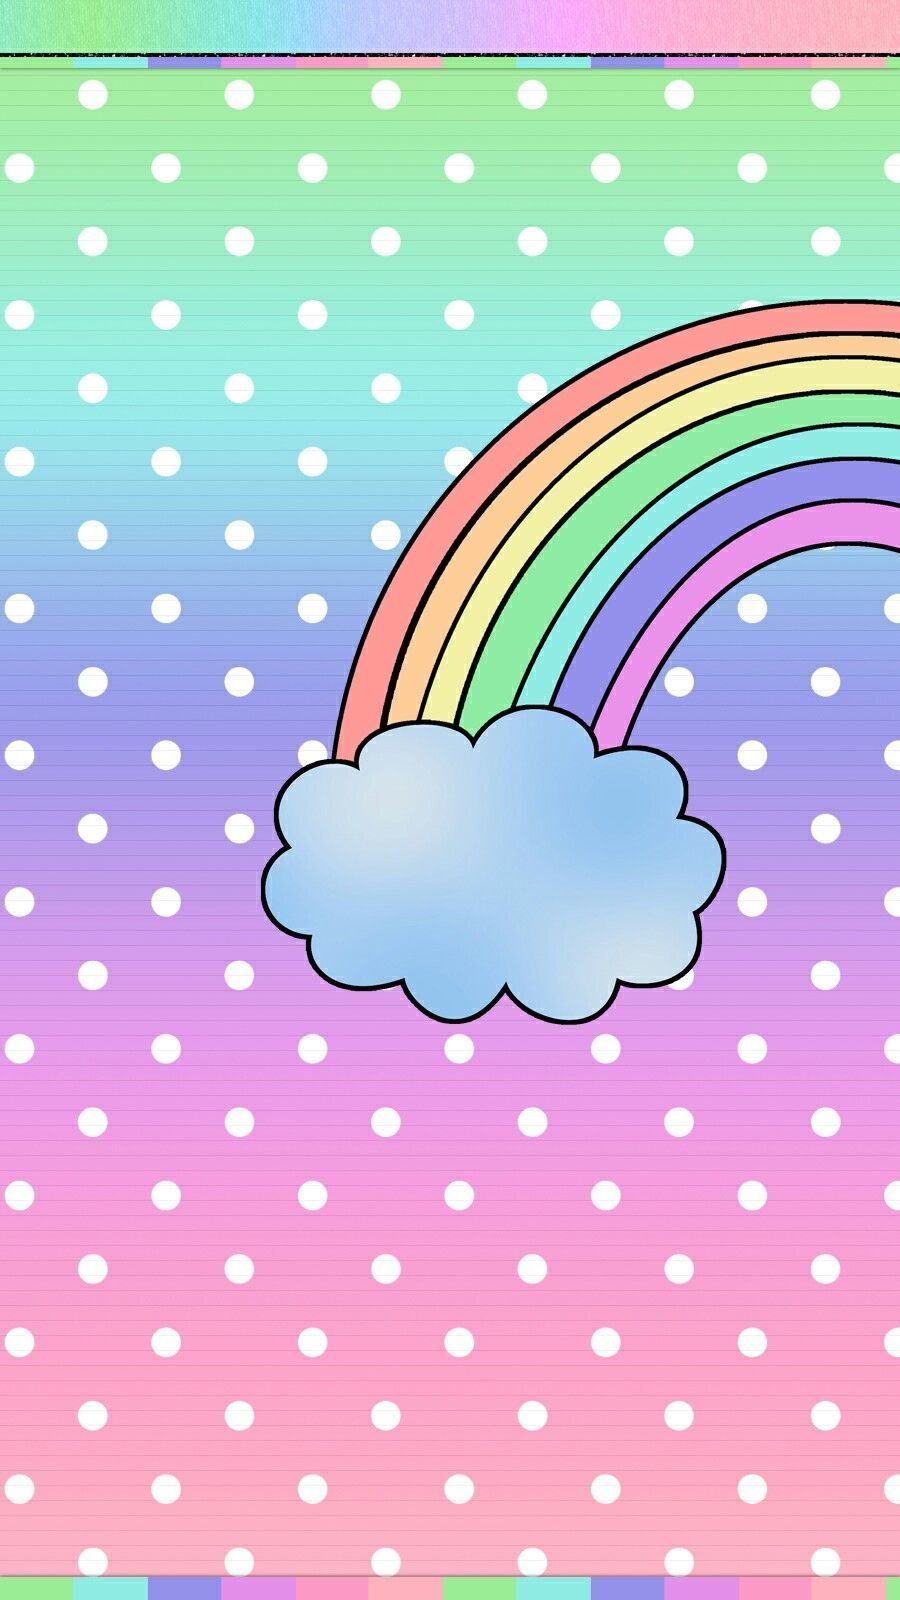 Rainbow aesthetic Wallpaper Download